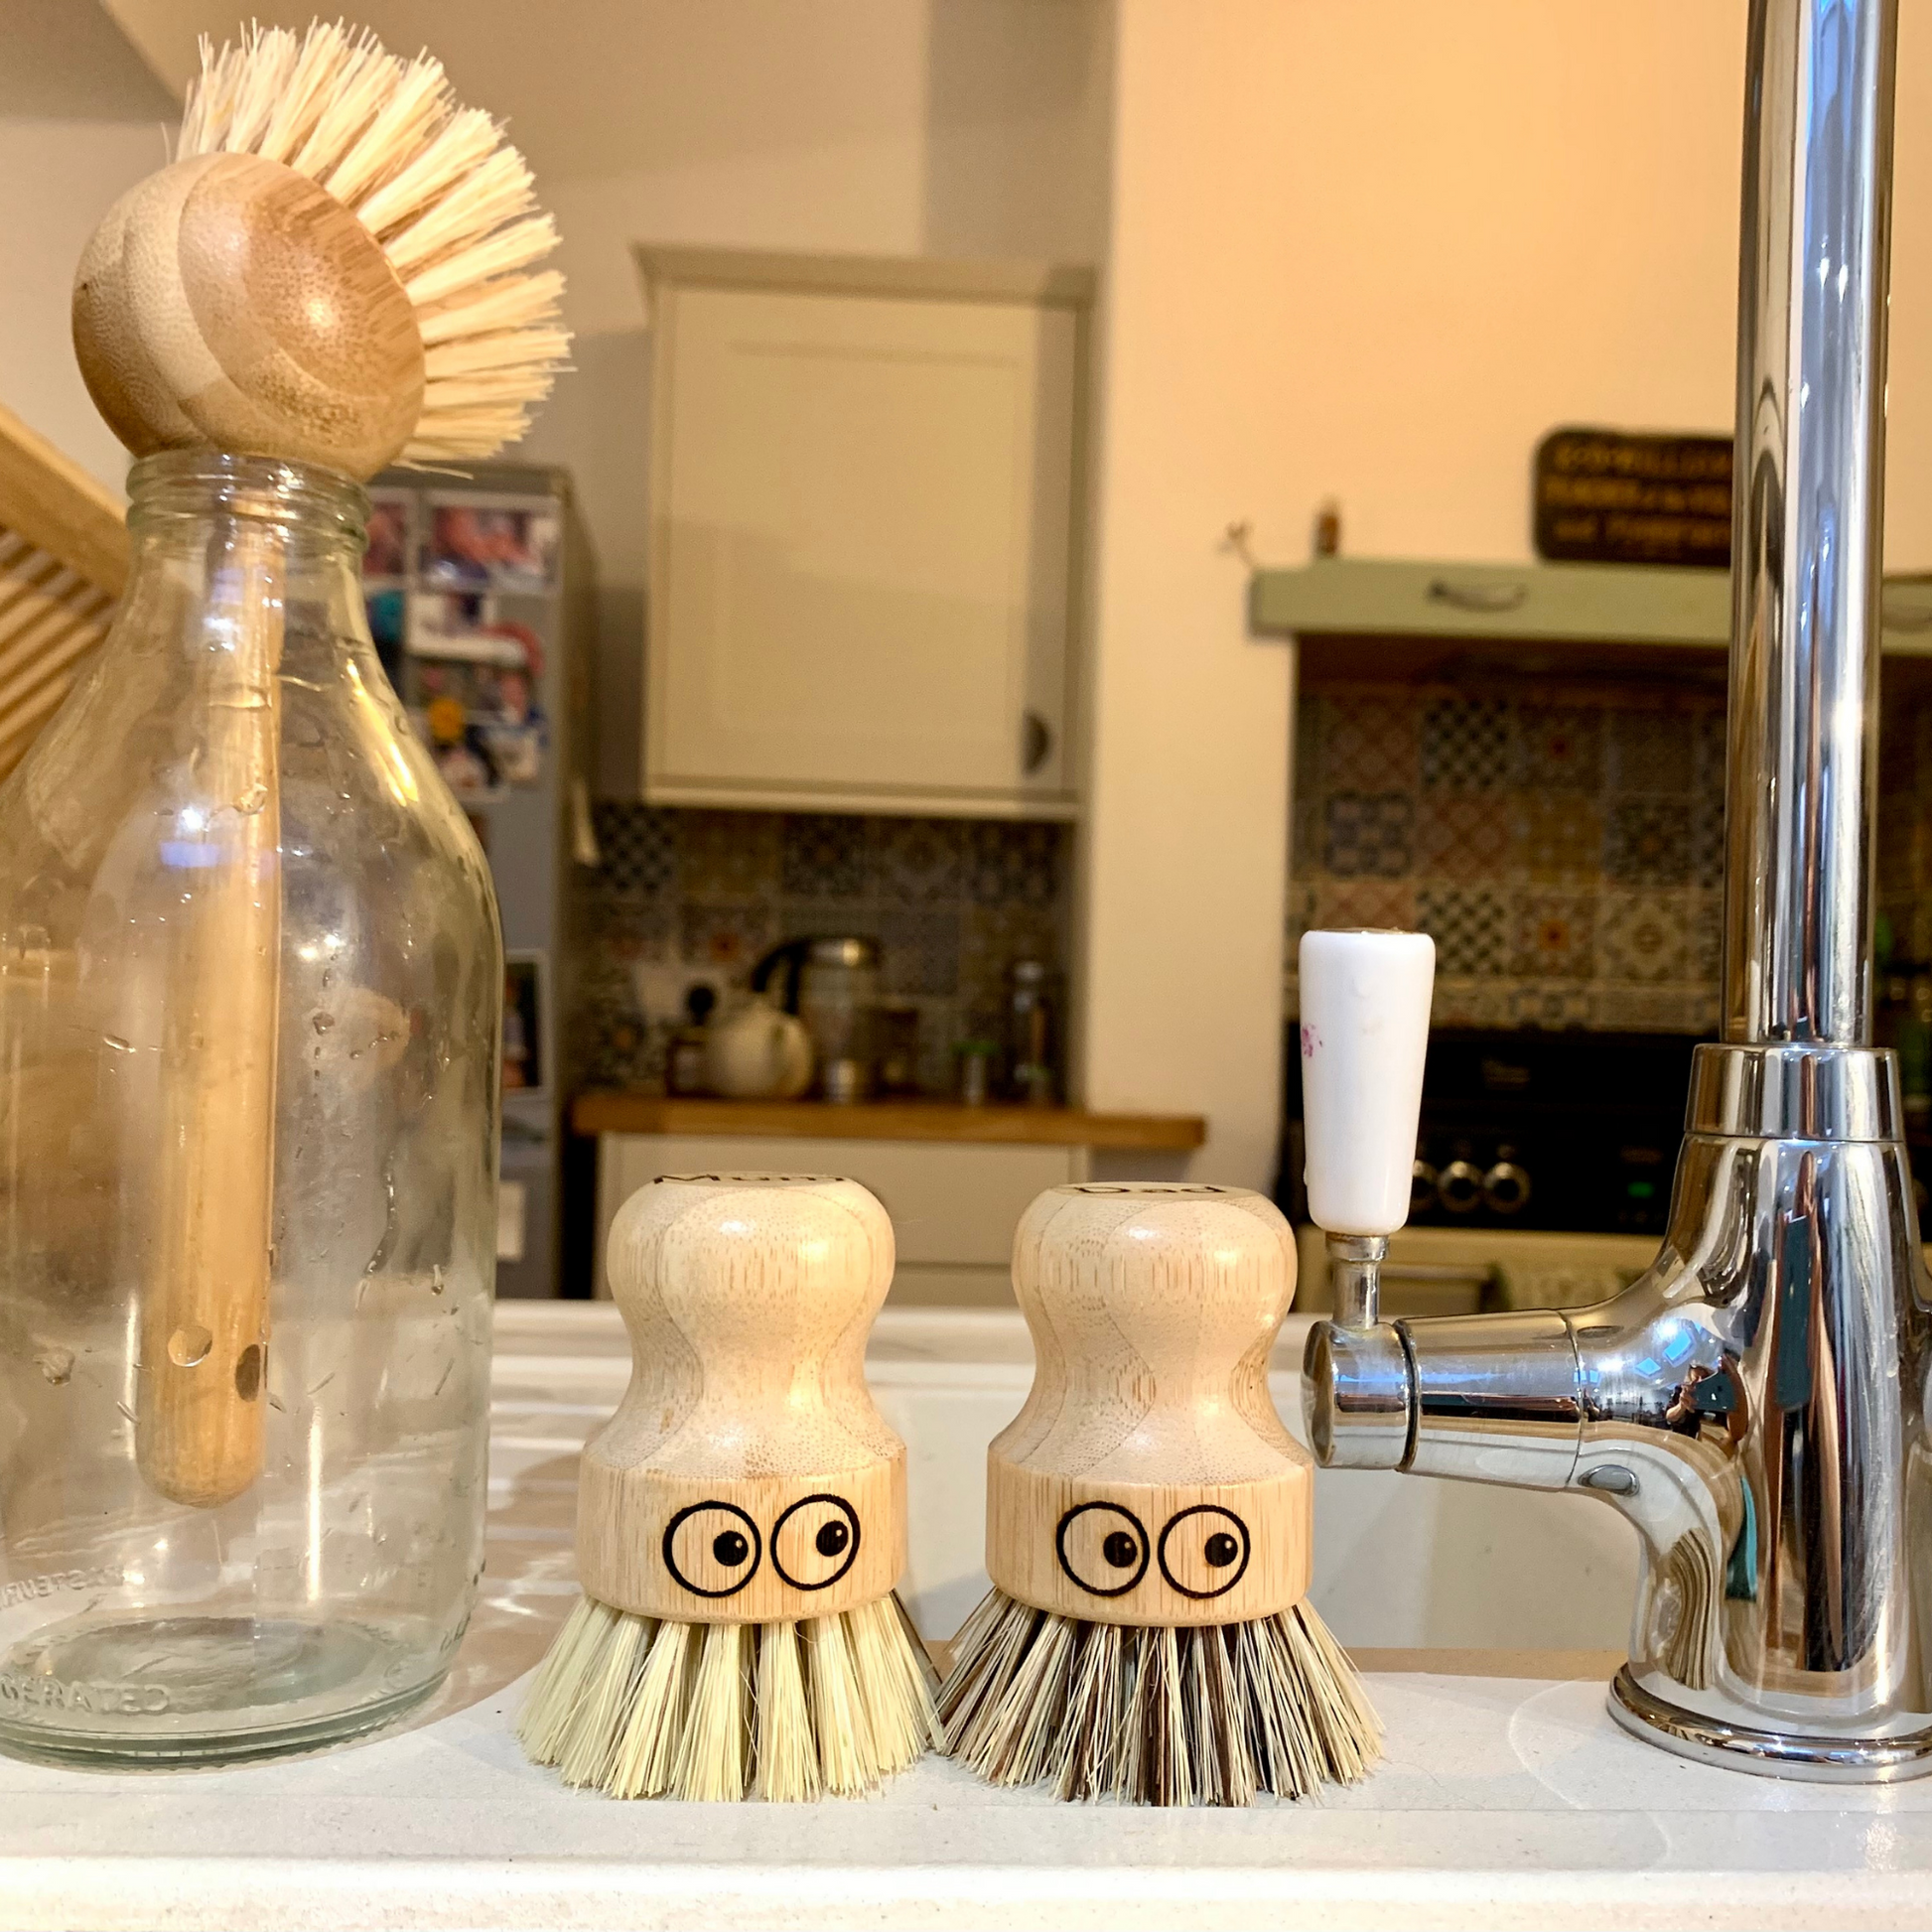 ecojiko bamboo pot scrubbing brushes with eyes in kitchen